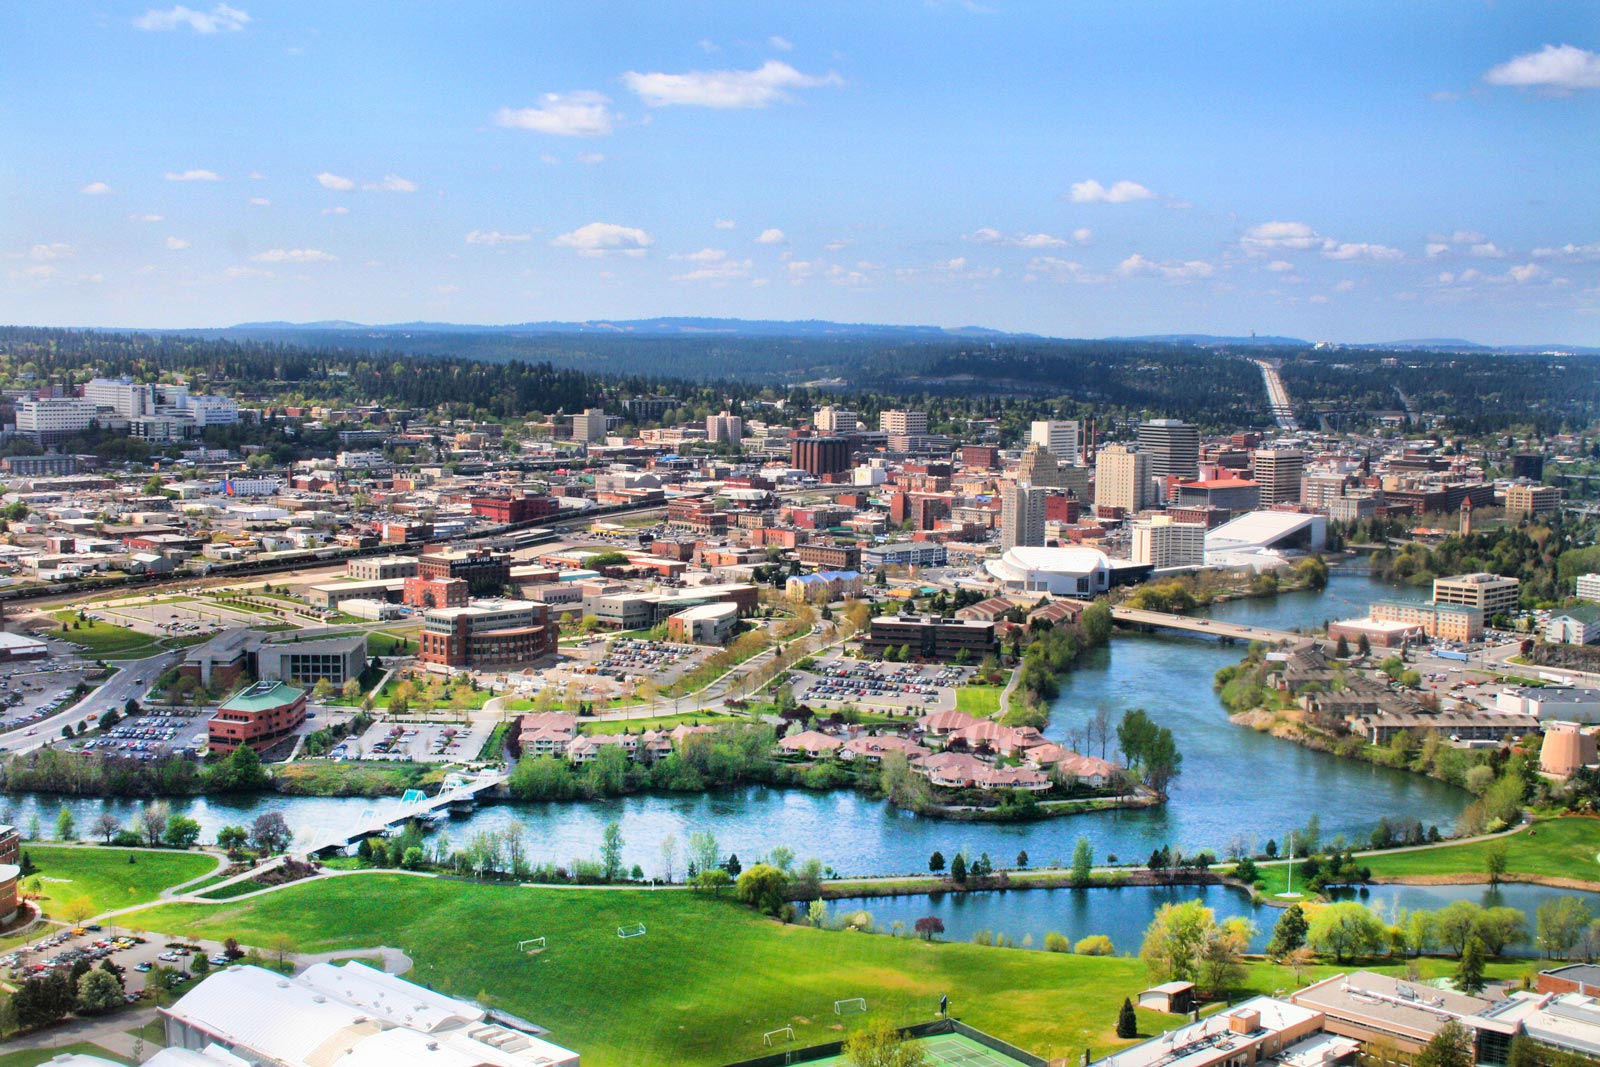 Panorama of downtown Spokane